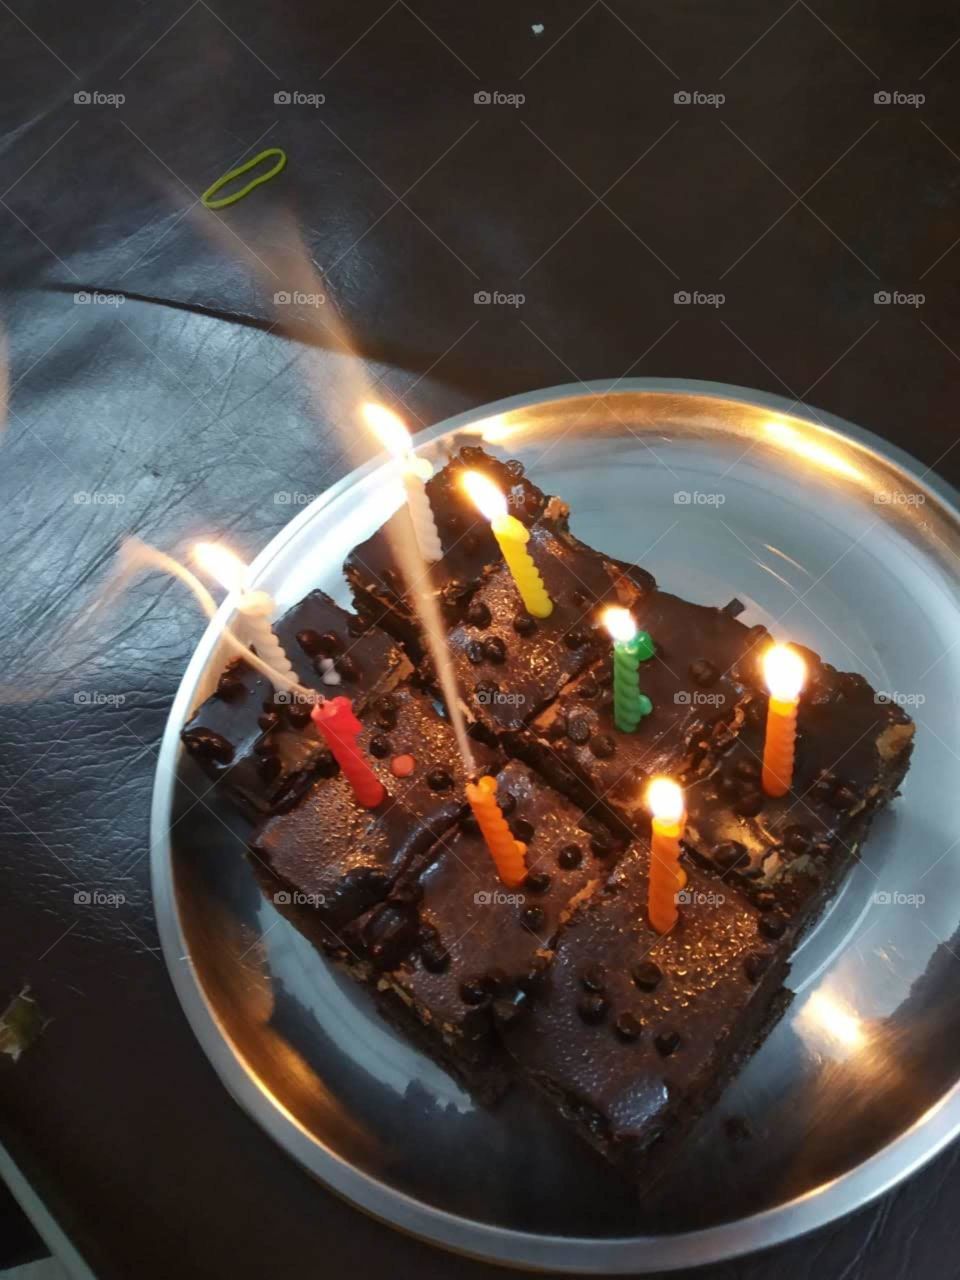 candle on cake